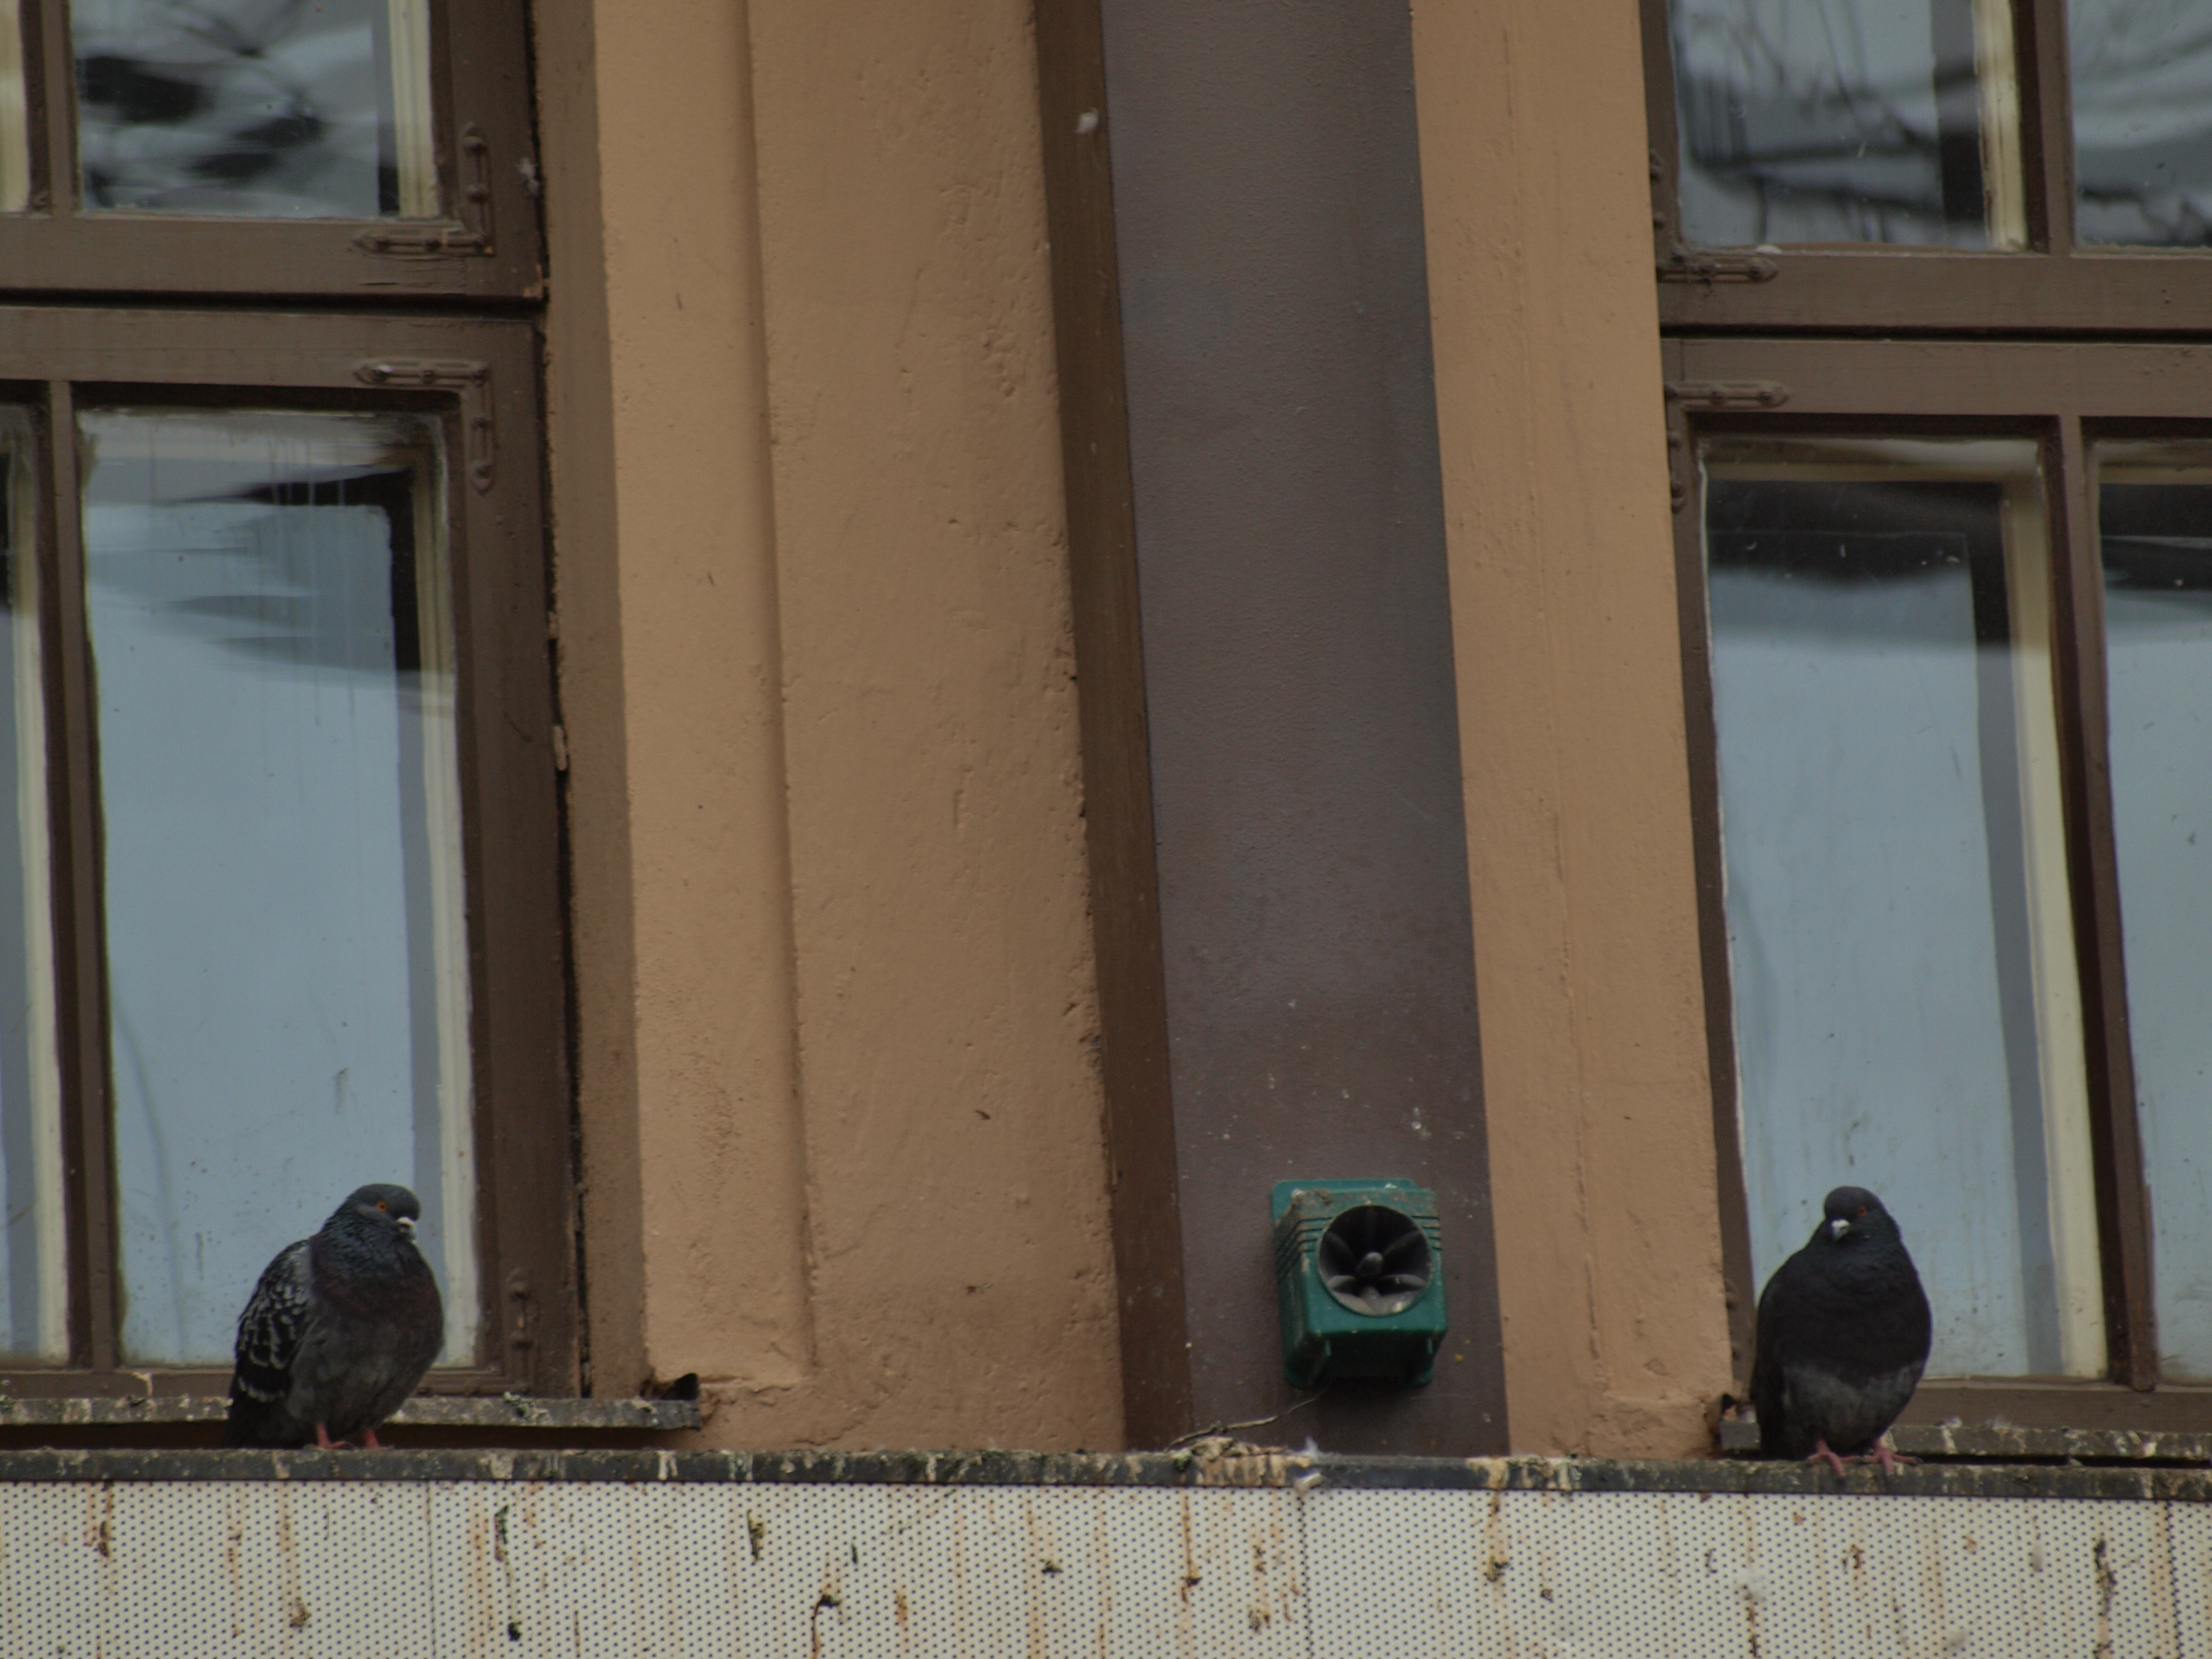 Pigeons photo